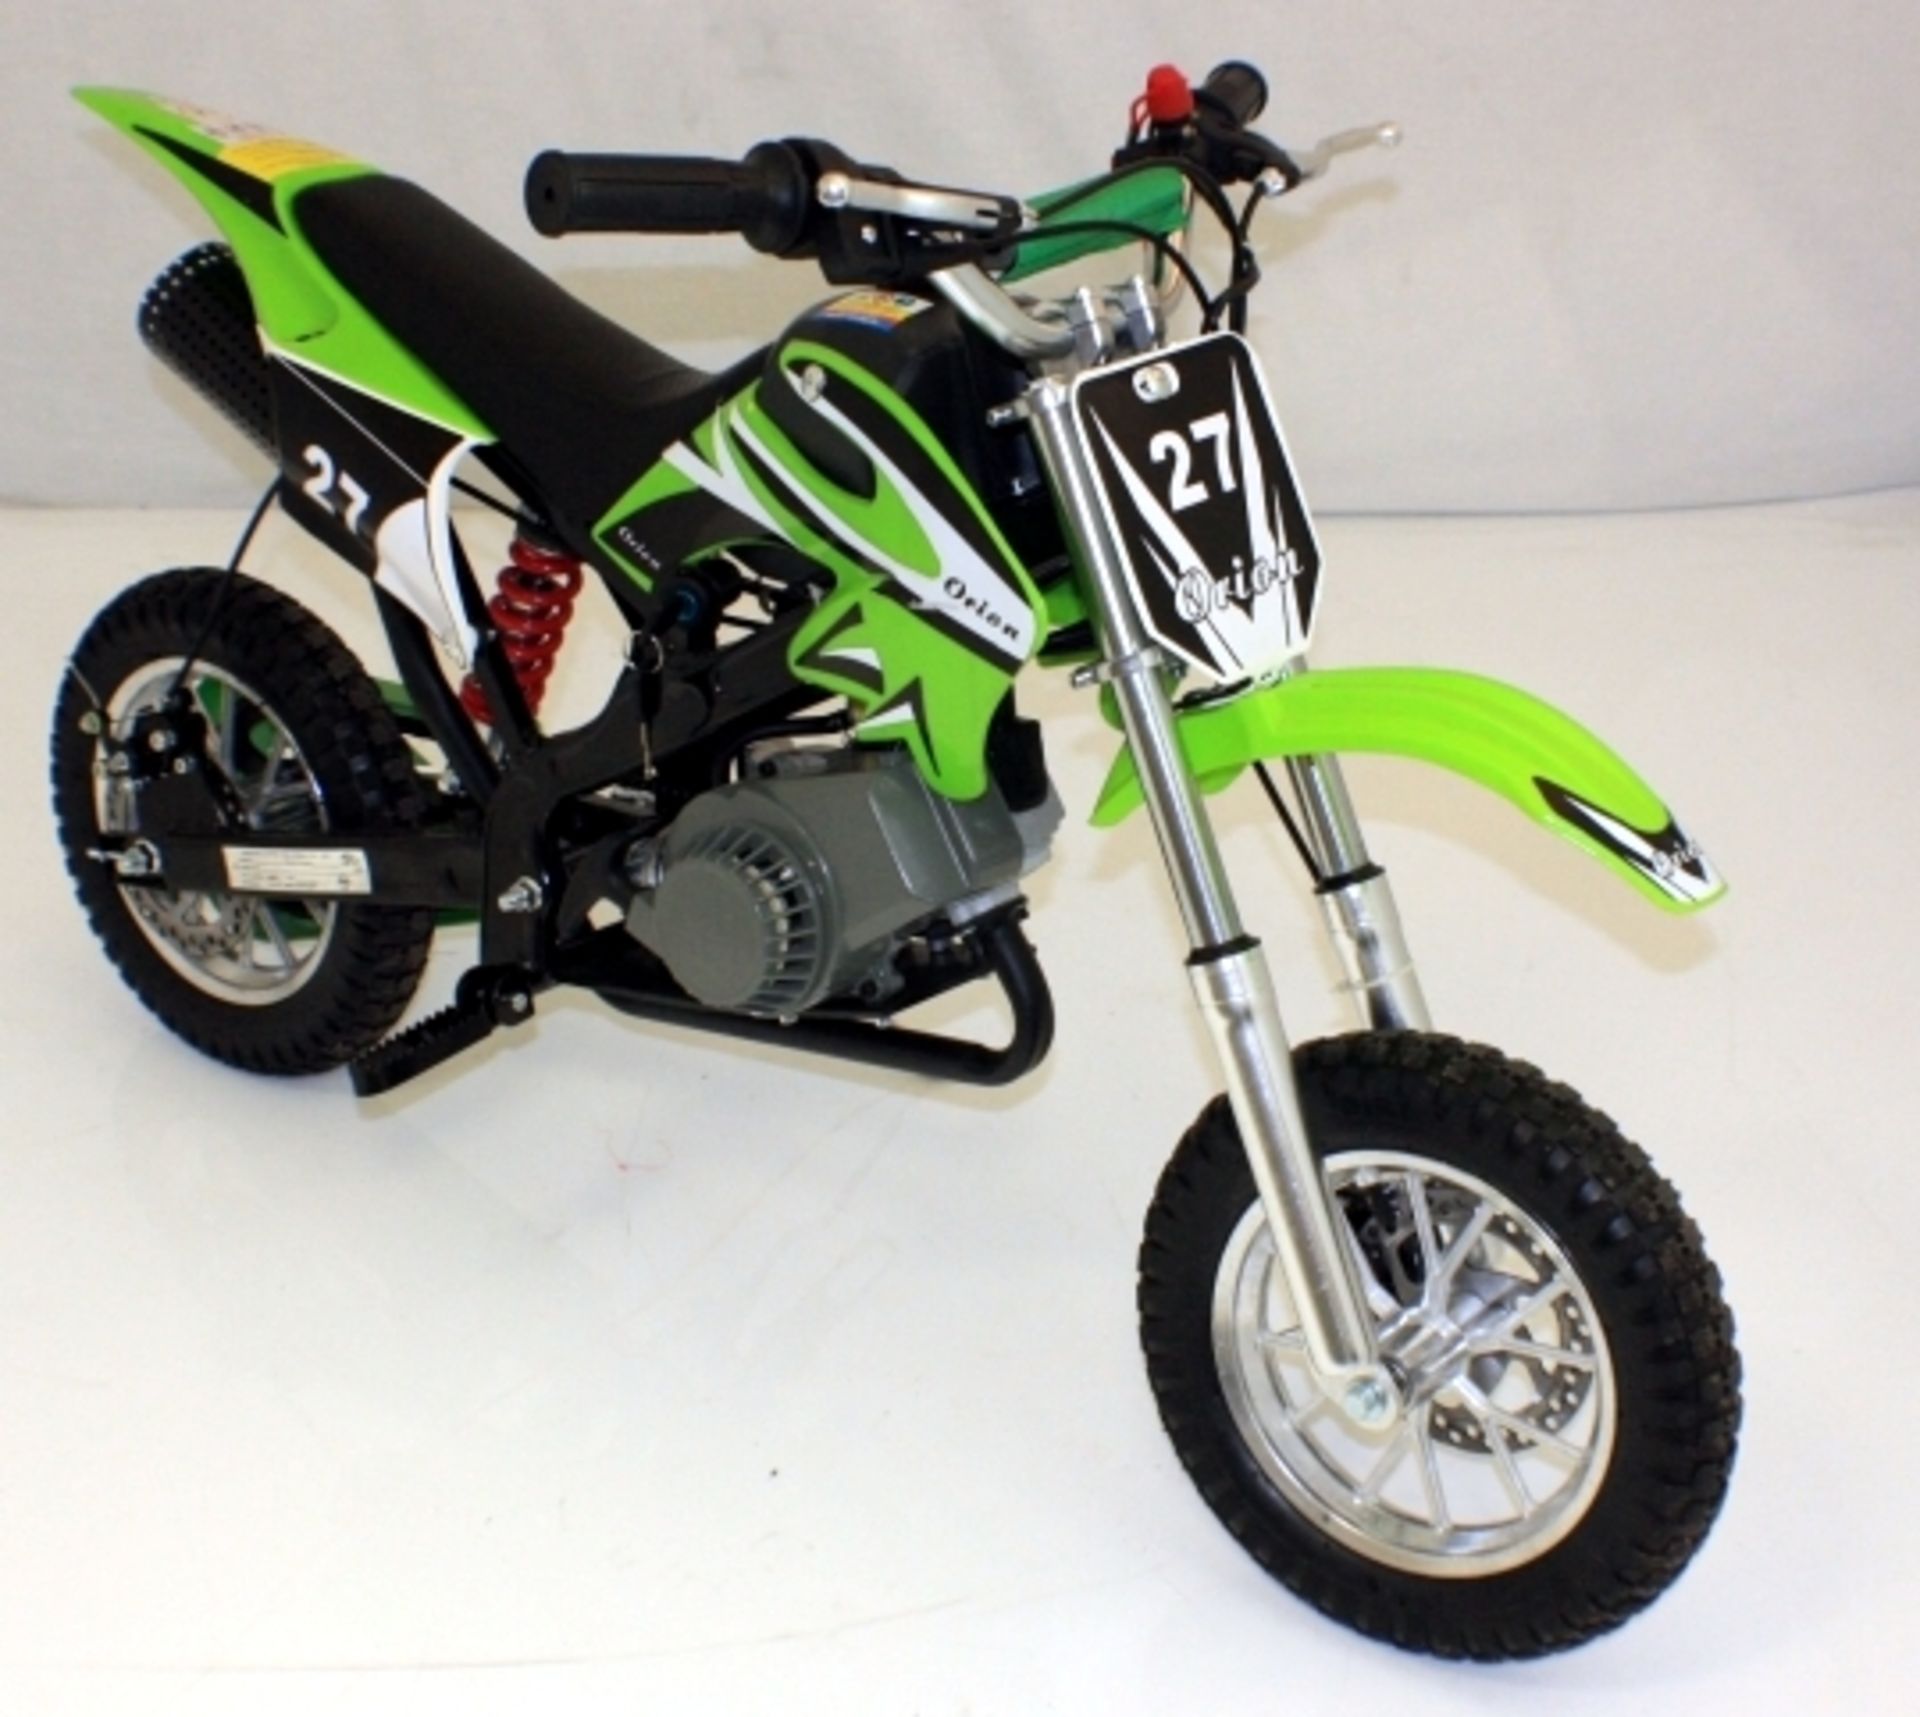 Mini Moto 50cc Dirt Bike Pocket Rocket Scrambler. Green - New & Boxed. These Mini Moto Dirt bikes